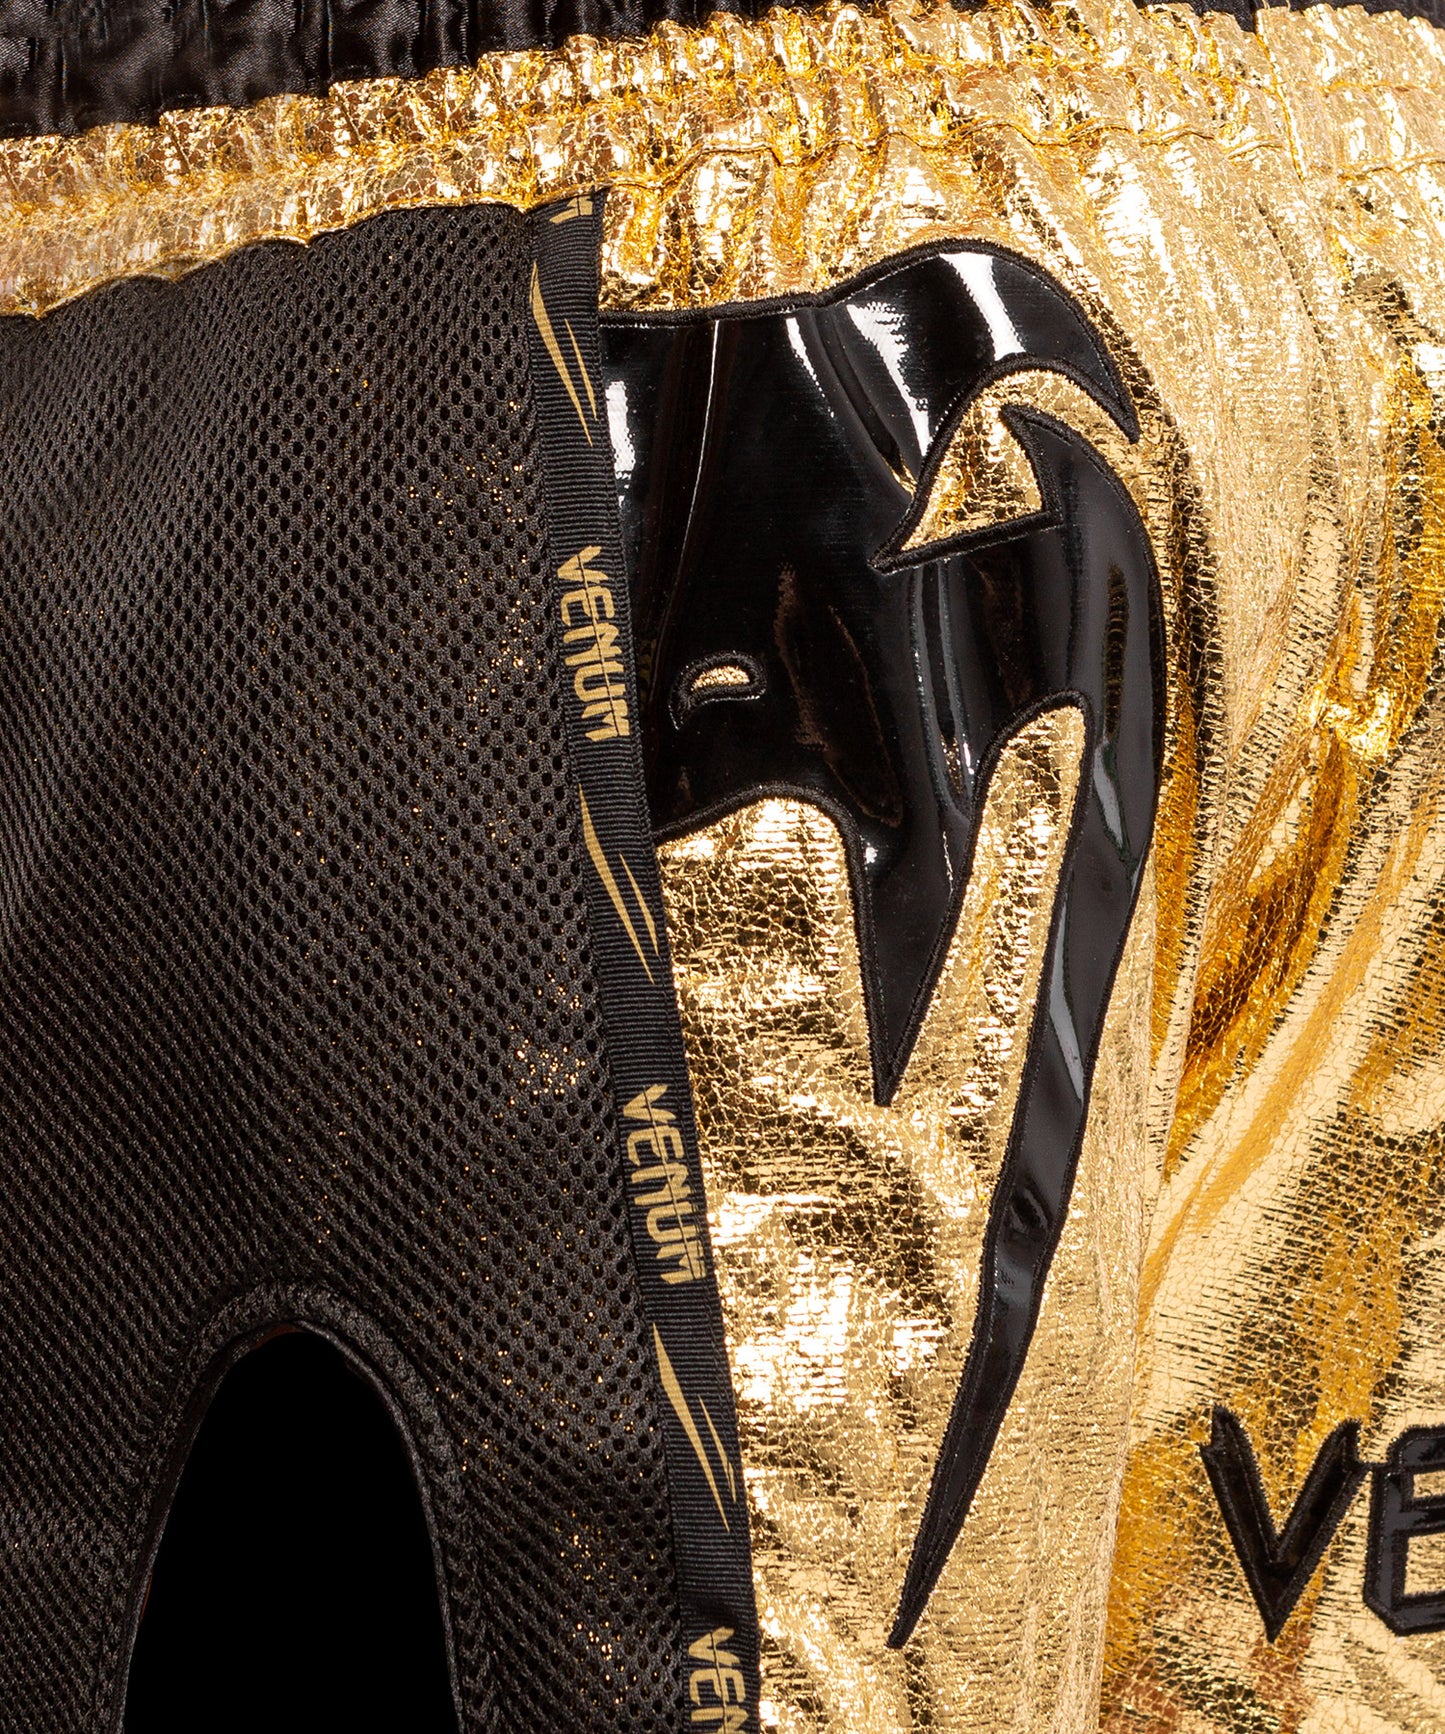 Venum Giant Foil Muay Thai Shorts - Gold/Black